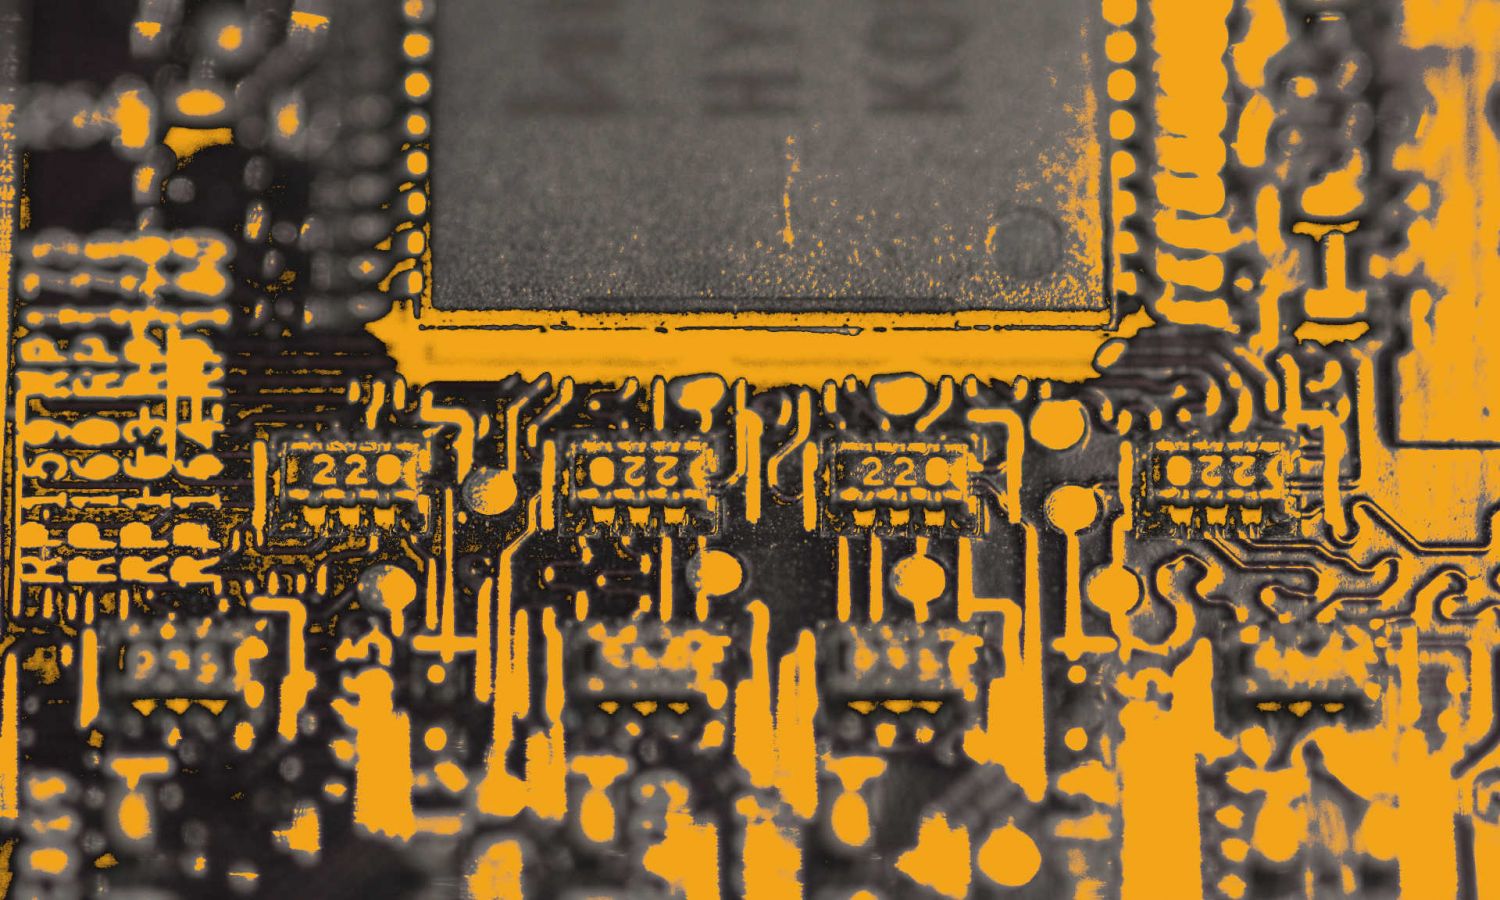 Decorative image of circuit board